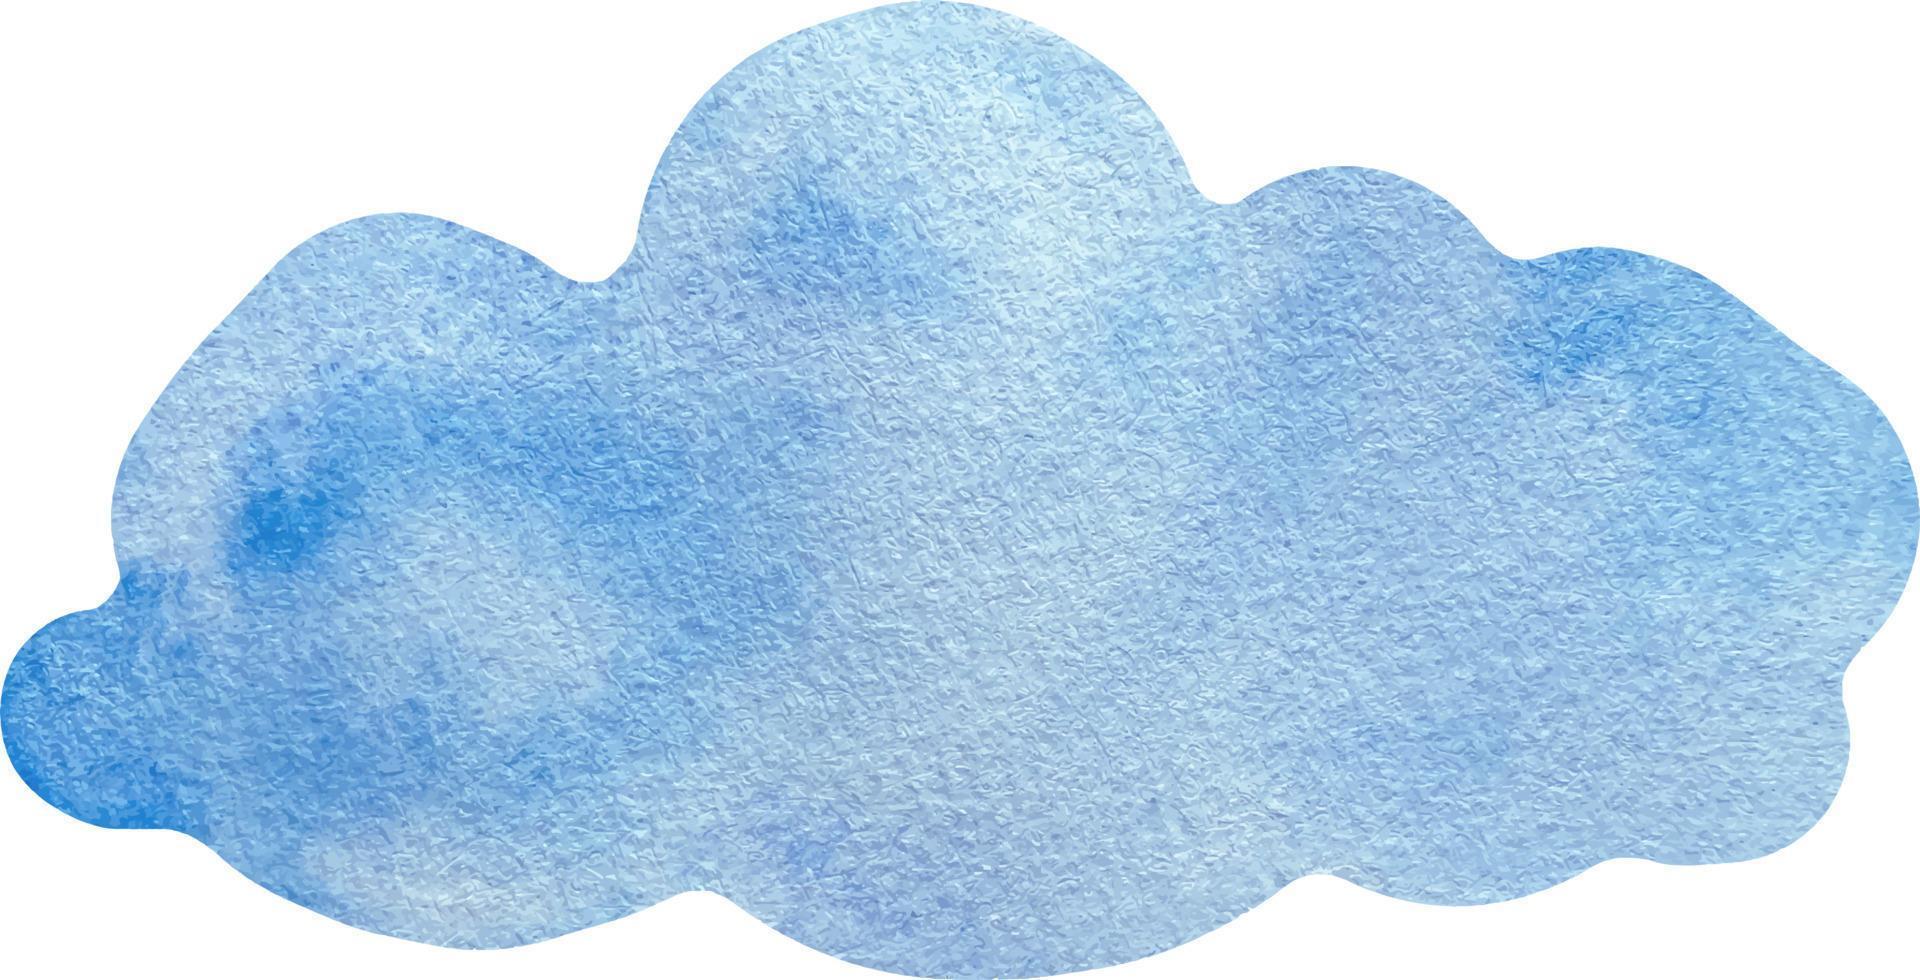 waterverf wolk. blauw wolken geïsoleerd Aan wit achtergrond. vector